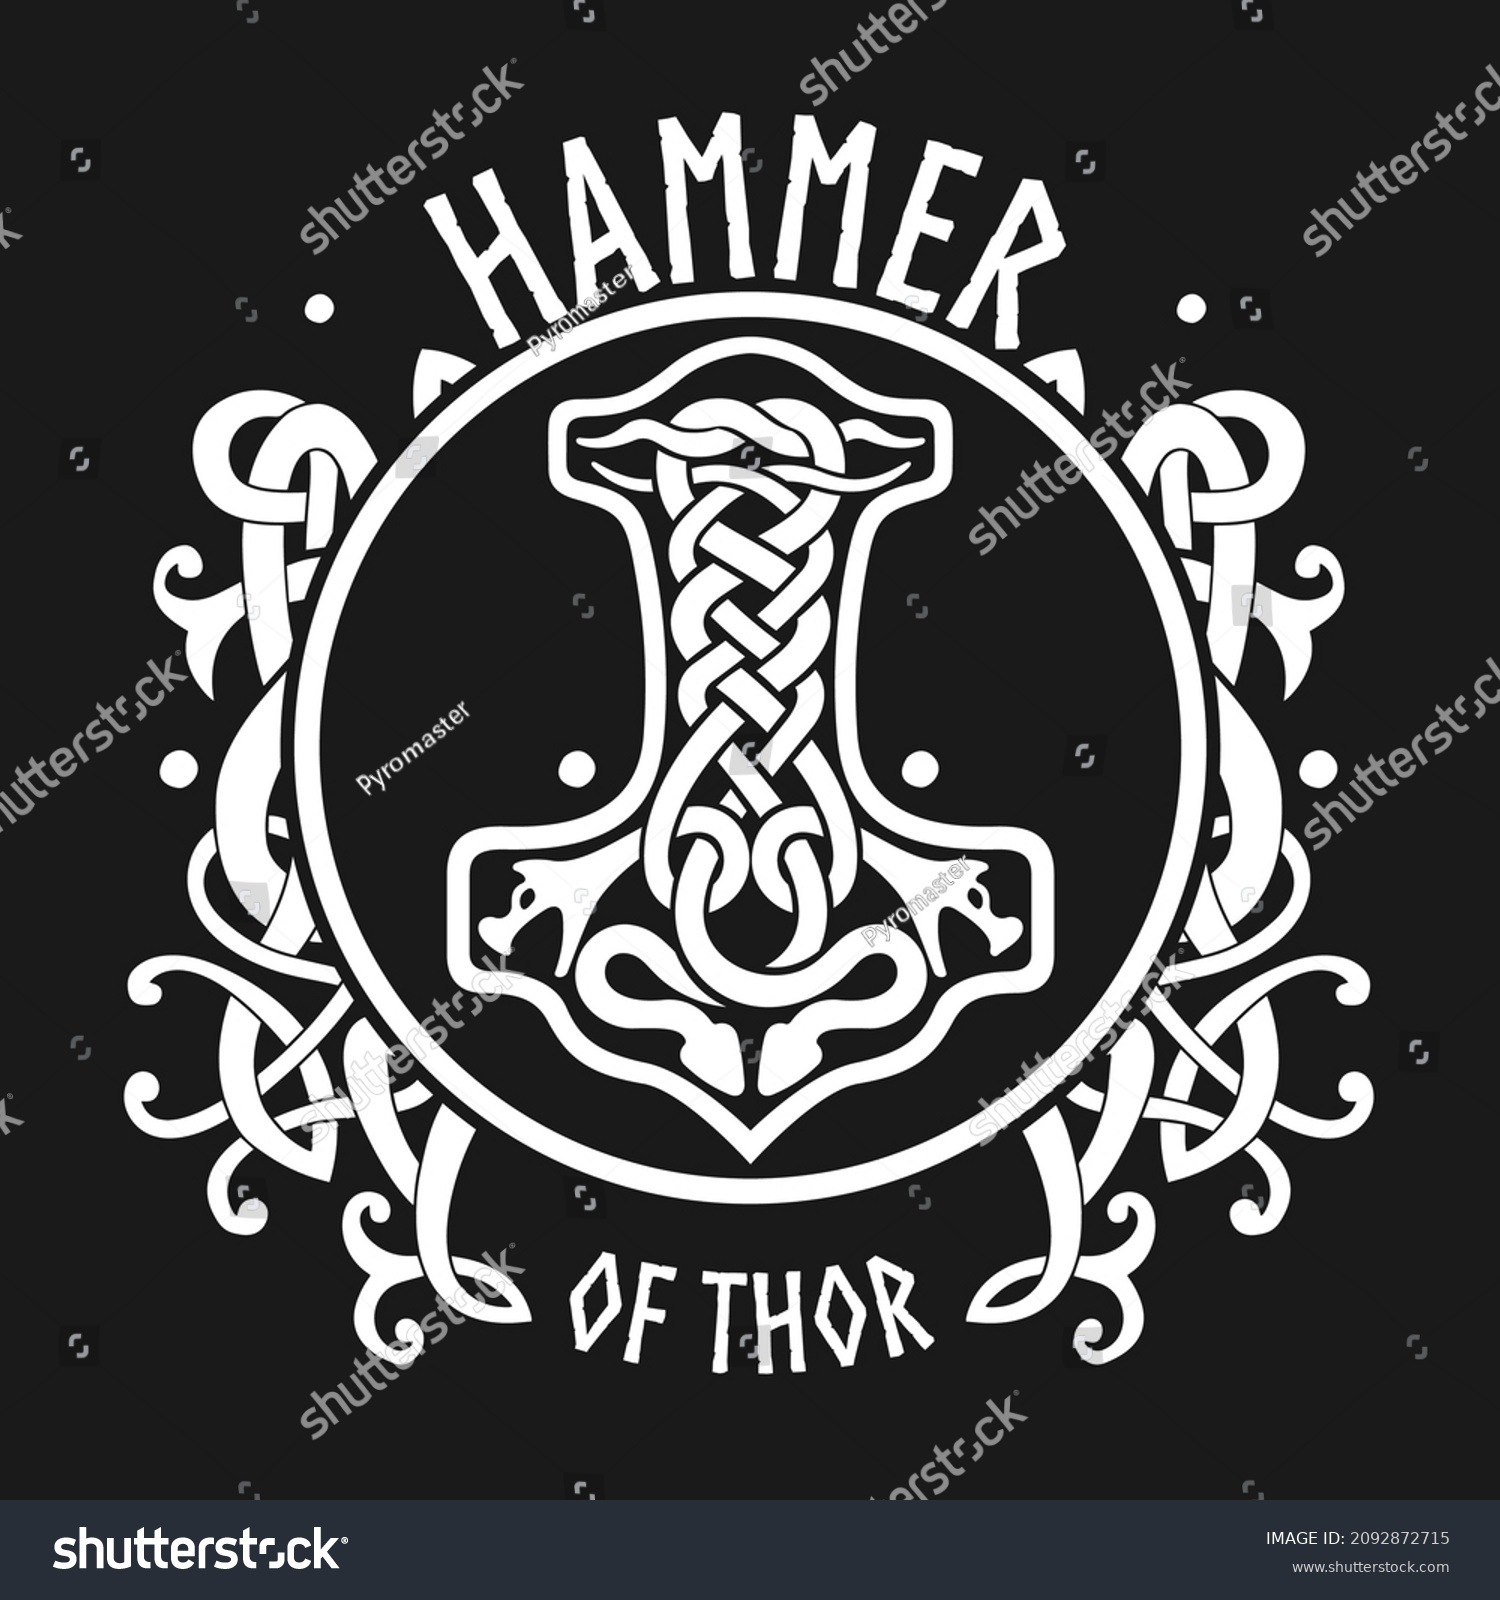 SVG of Hammer of Thor Mjolnir Celtic knot, Scandinavian Viking style ornament. Isolated vector illustration. Hand drawing. svg